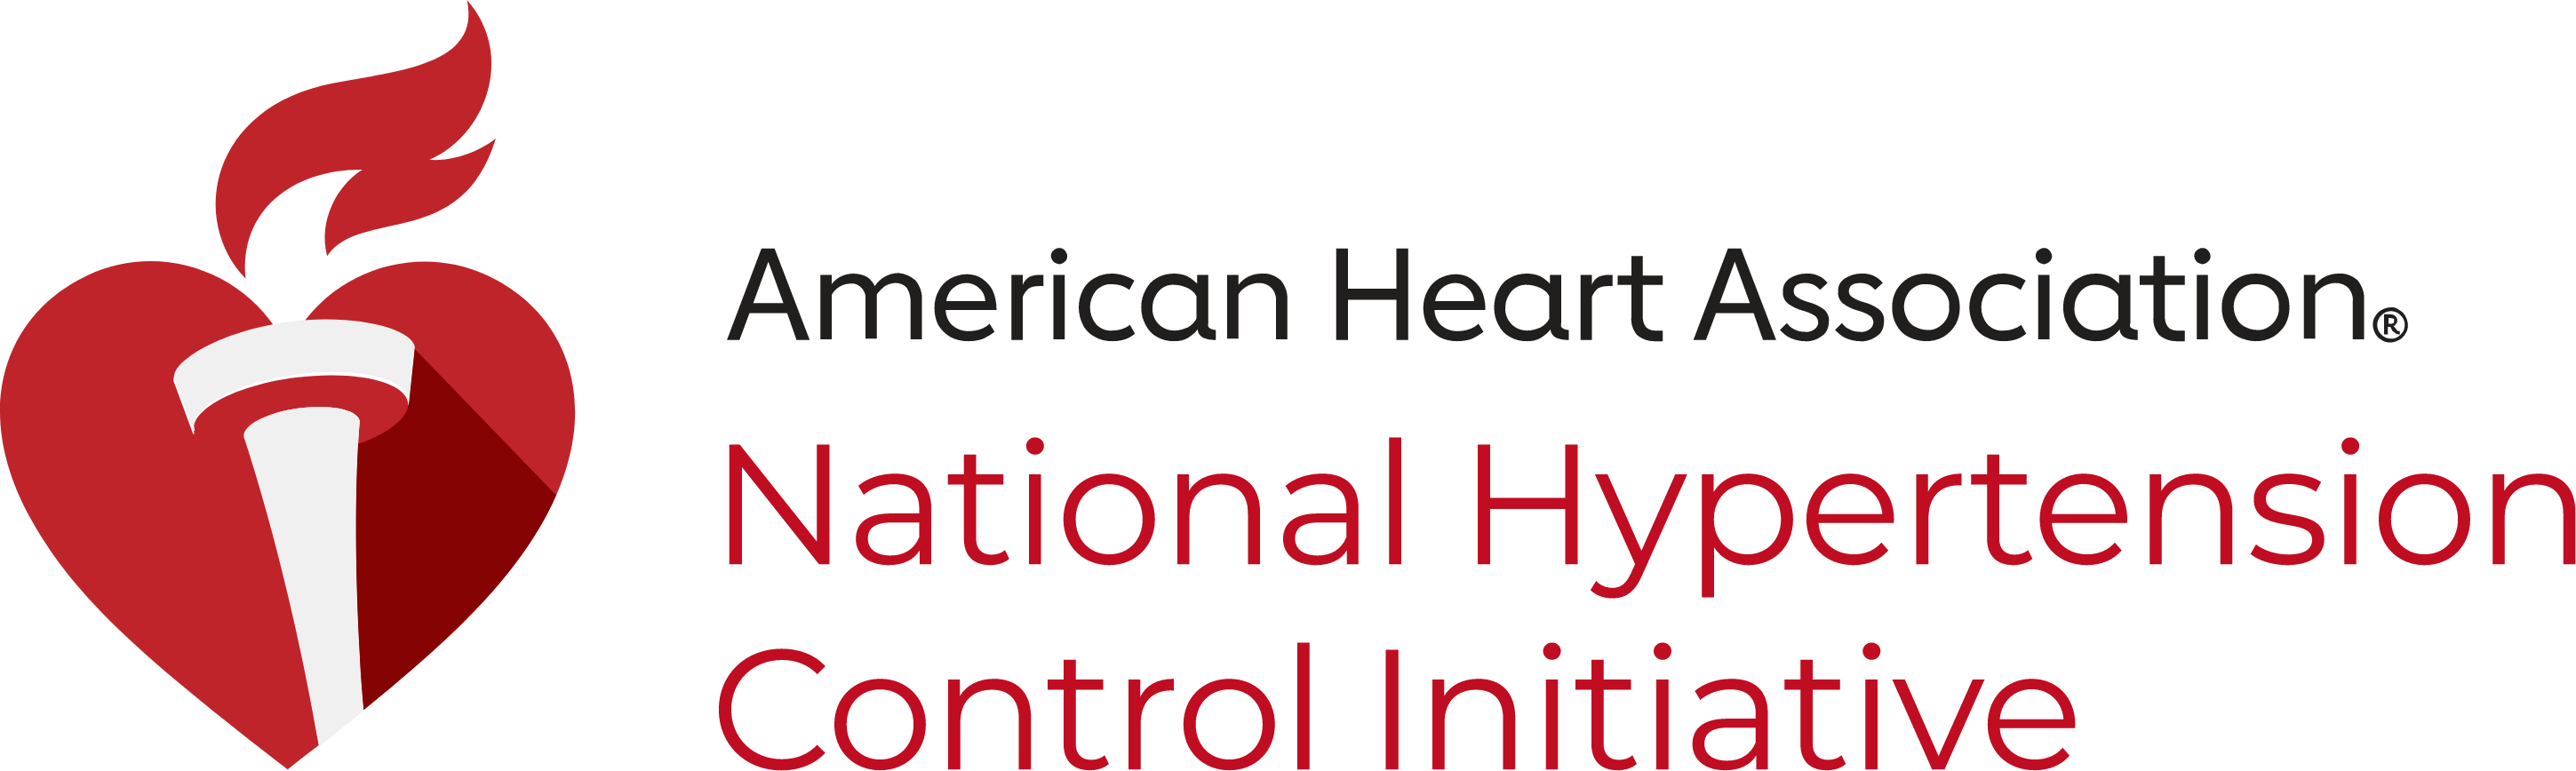 American Heart Association - National Hypertension Control Initiative Logo